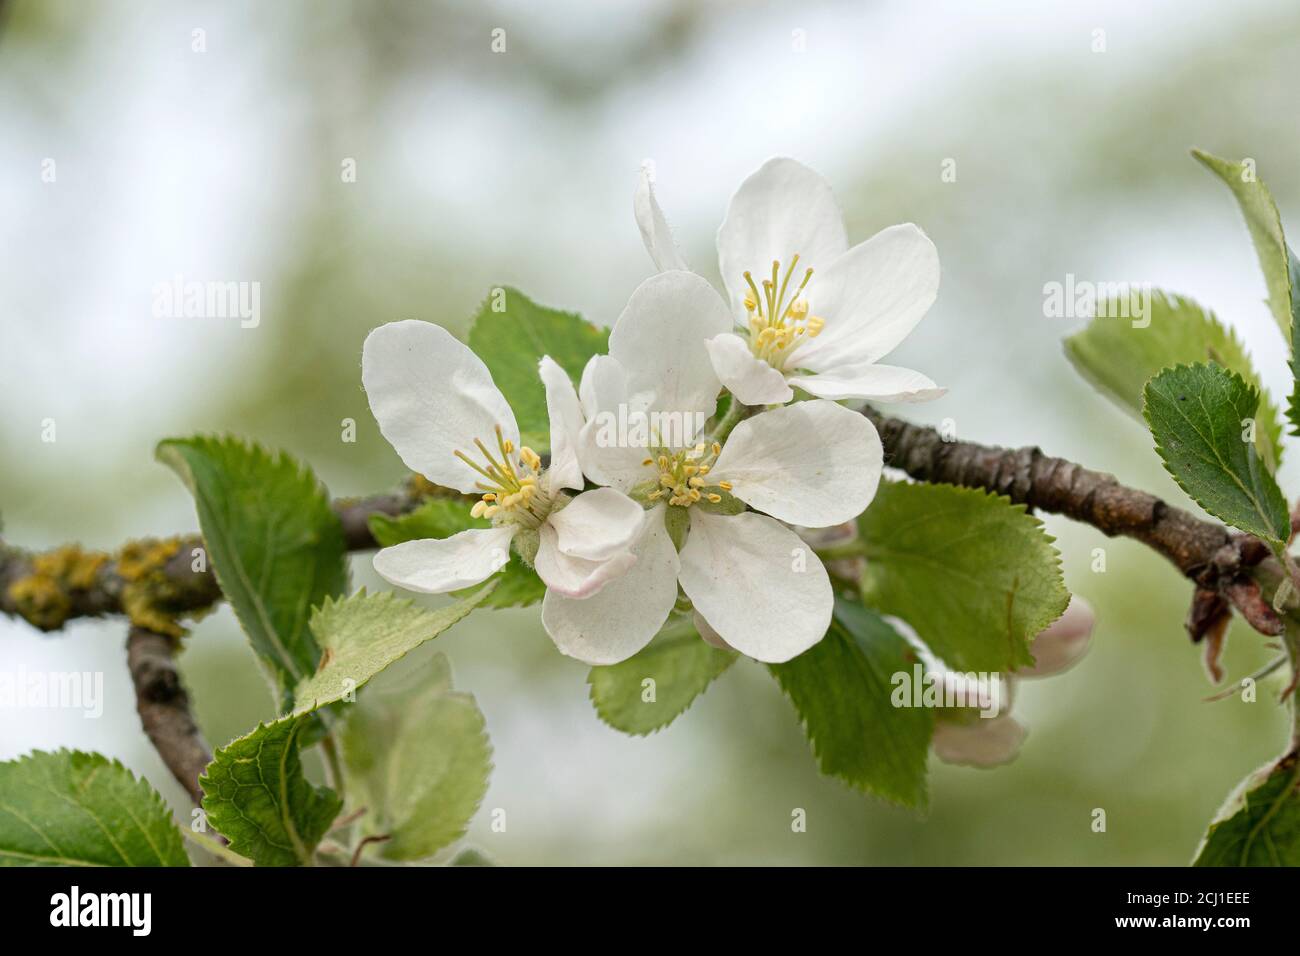 Ornamental apple tree (Malus pumila 'Dartmouth', Malus pumila Dartmouth), flowers of cultivar Dartmouth Stock Photo